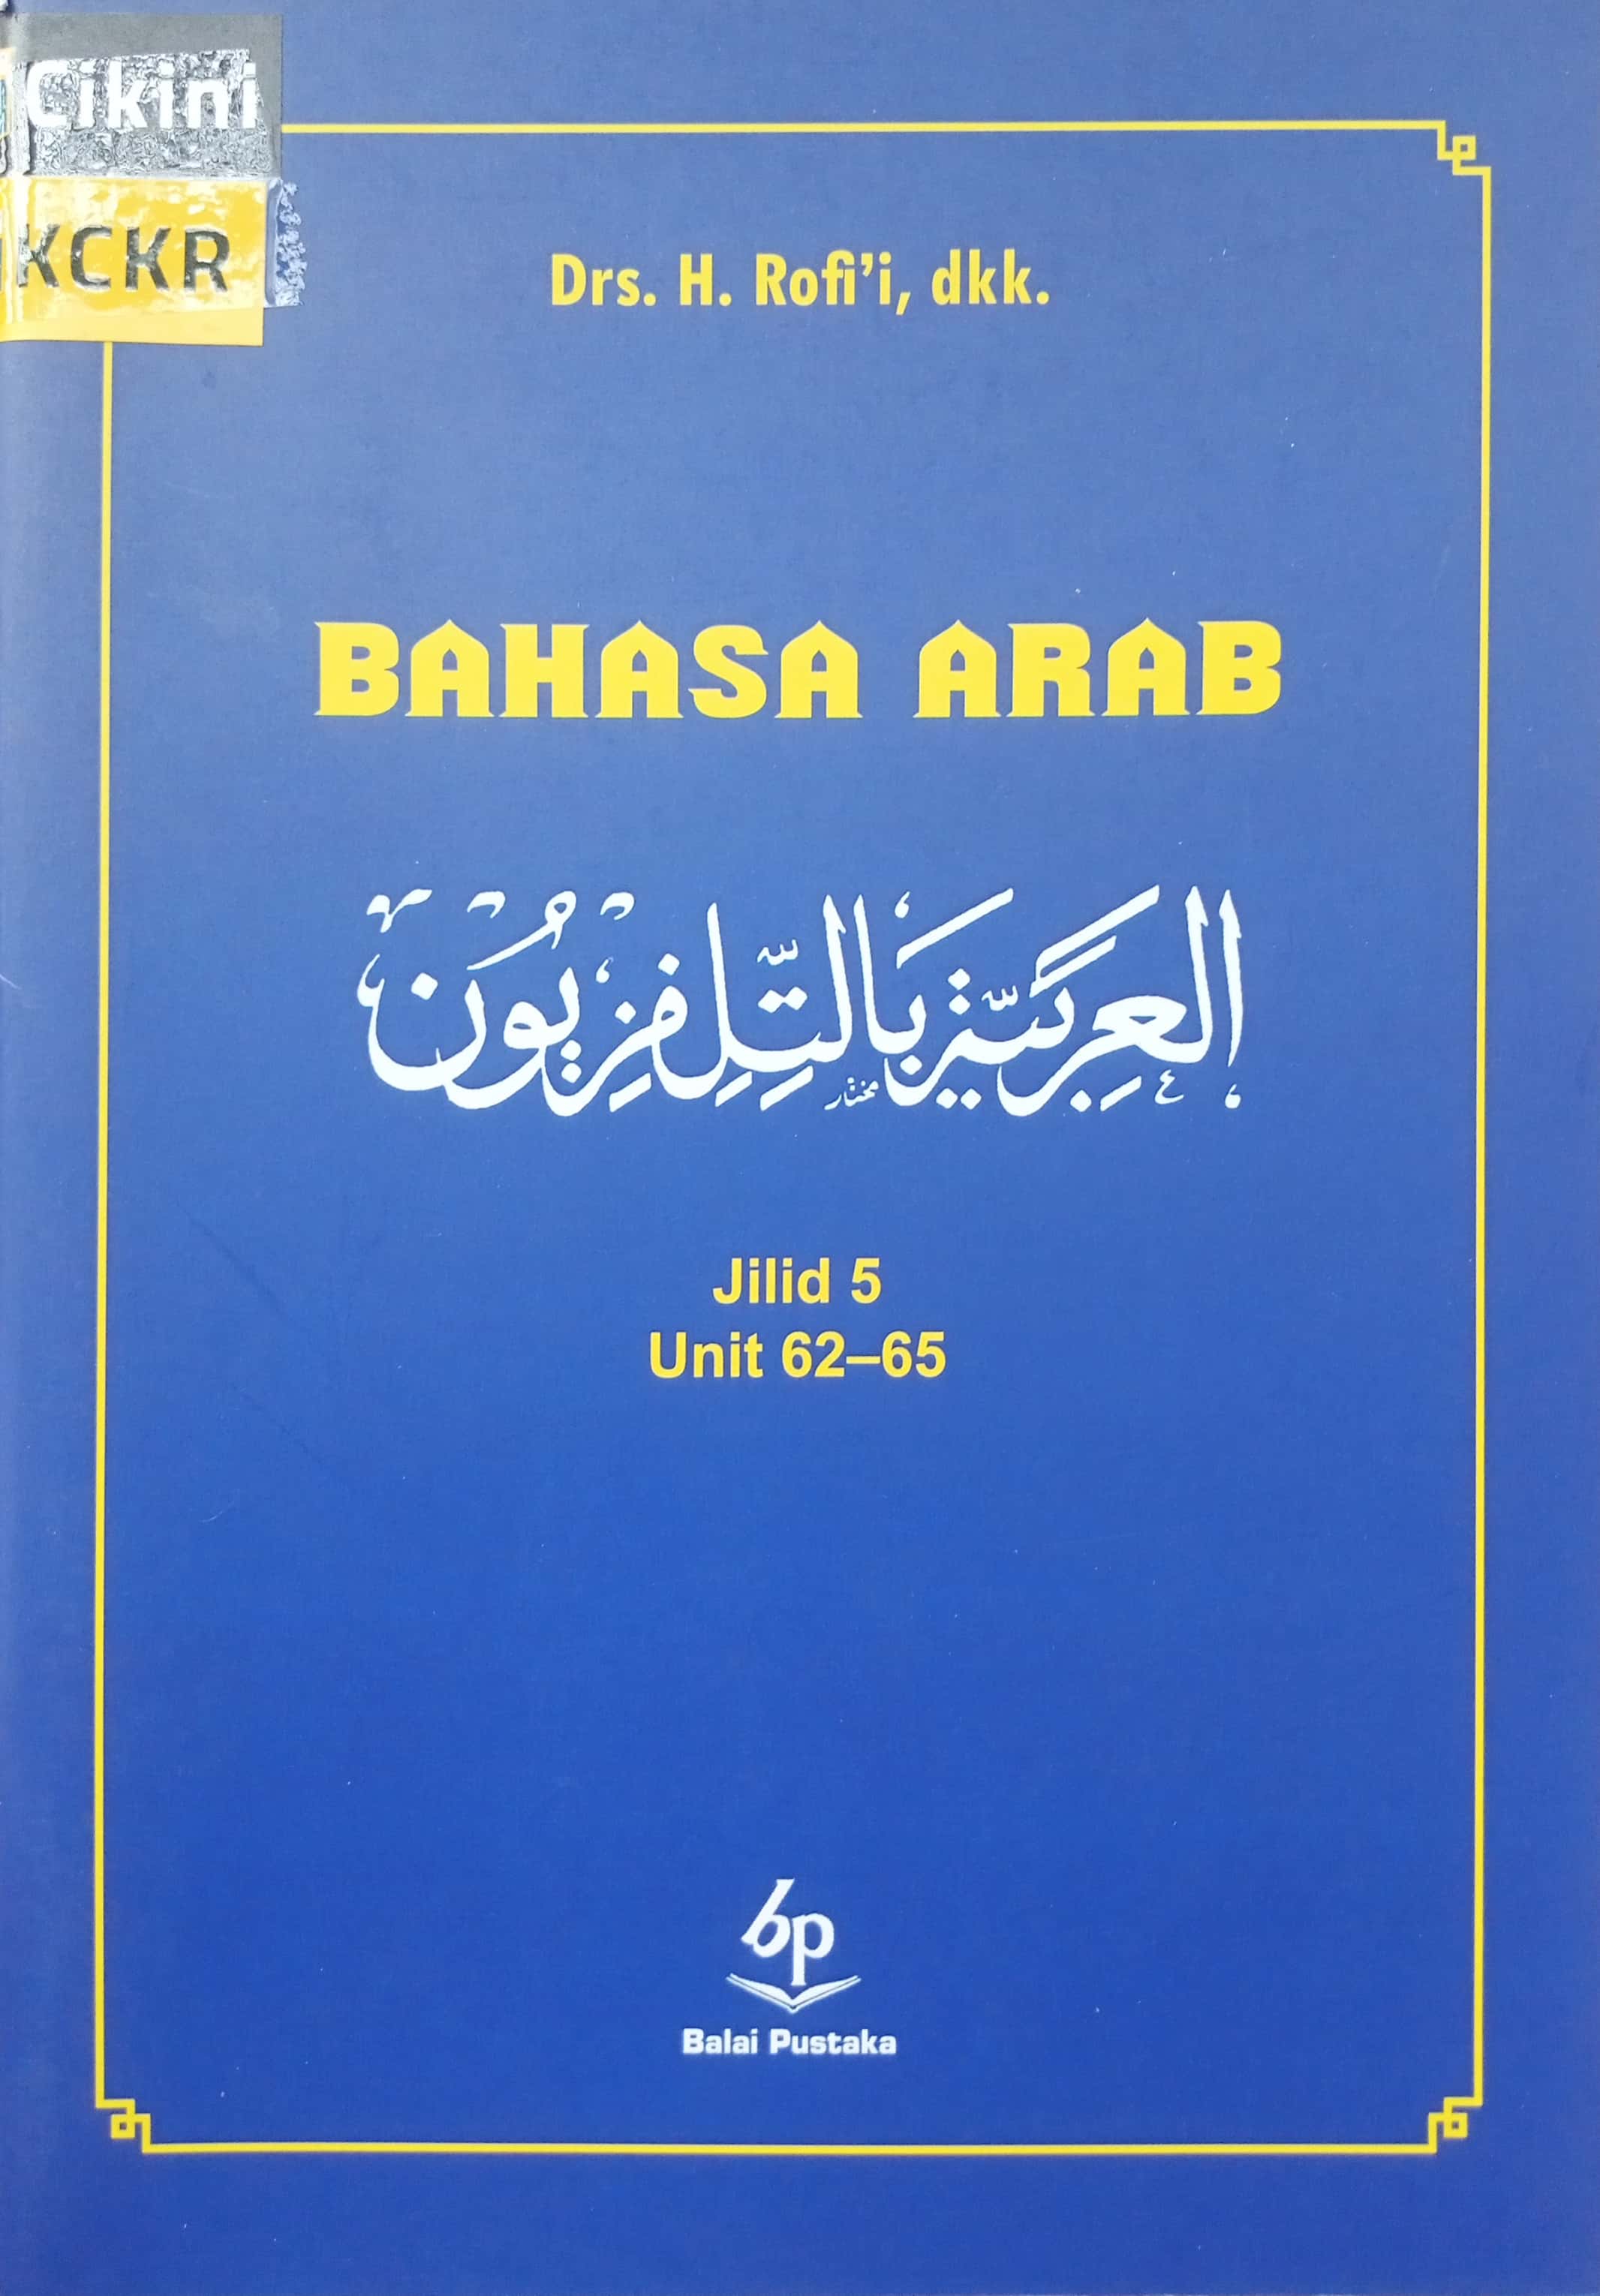 Bahasa Arab jilid 5 unit 62-65